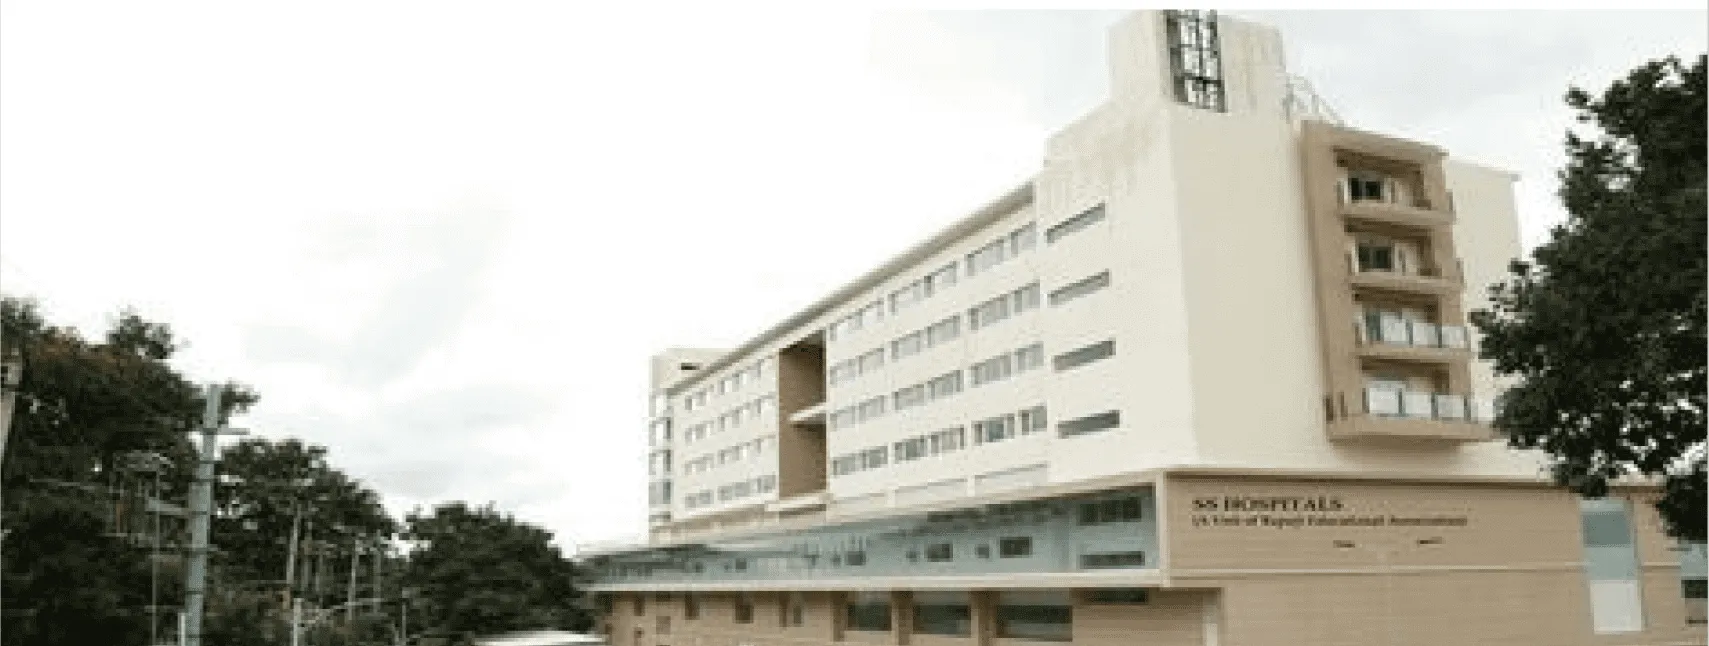 SS Hospital, Bangalore